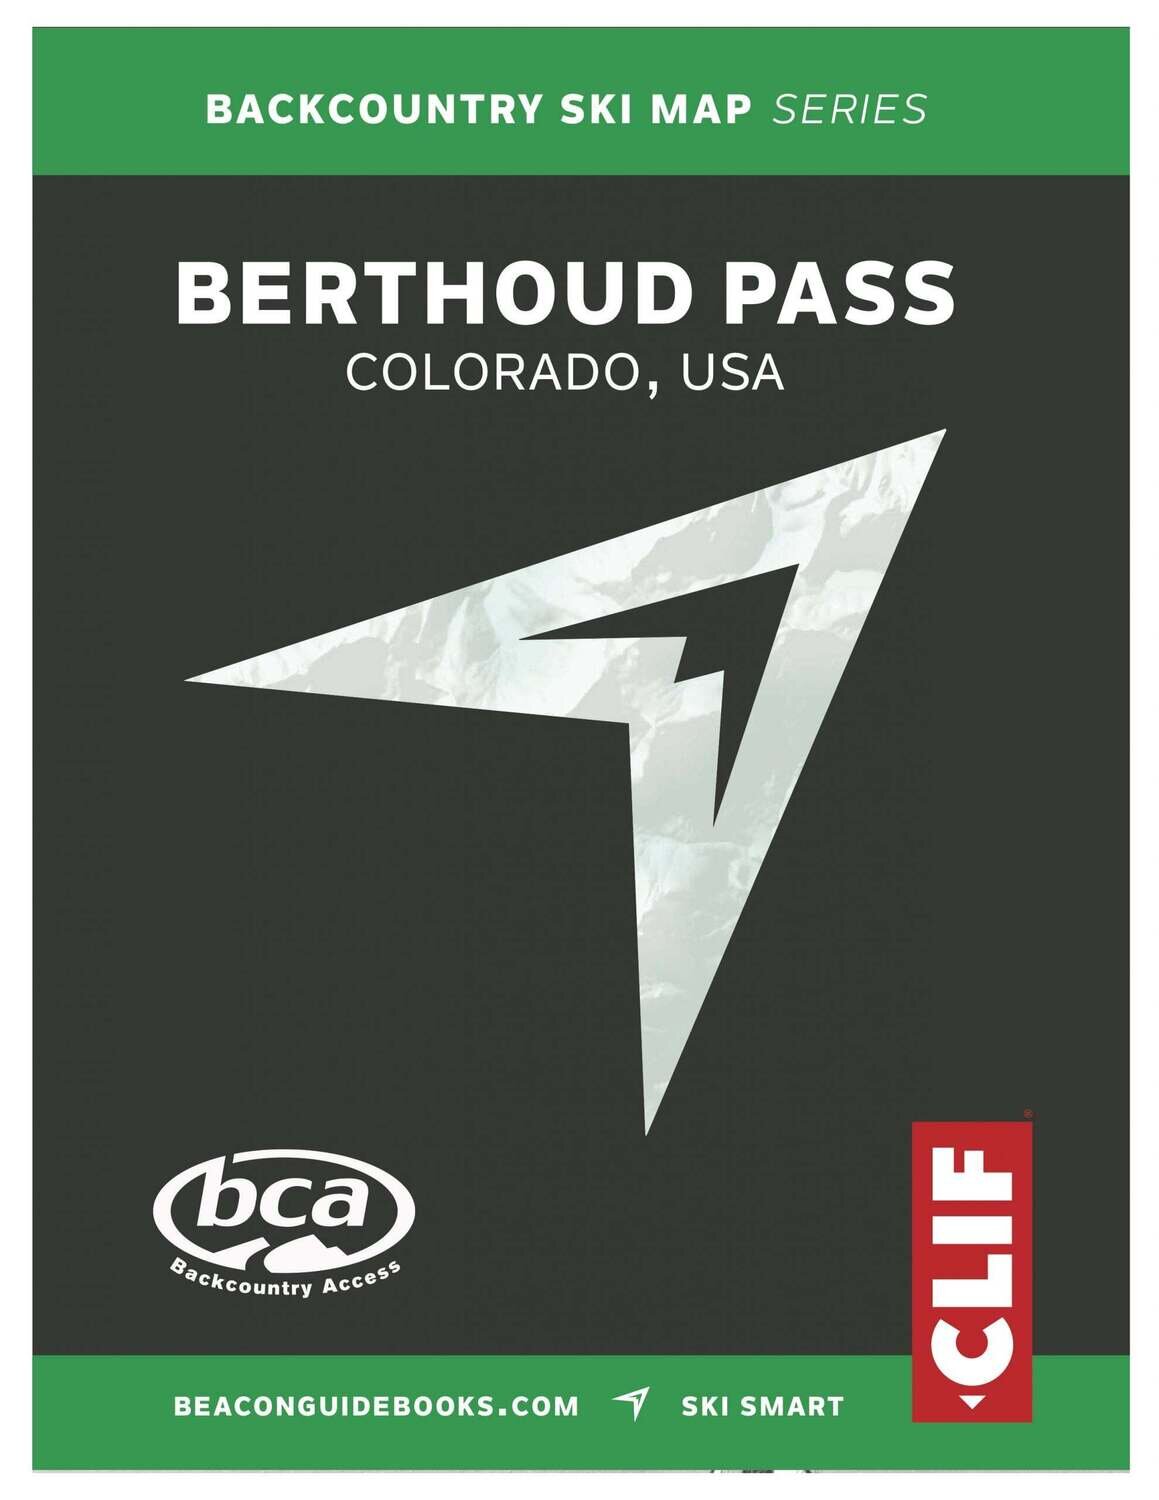 Beacon Guidebooks Back Country Ski Map - Berthoud Pass